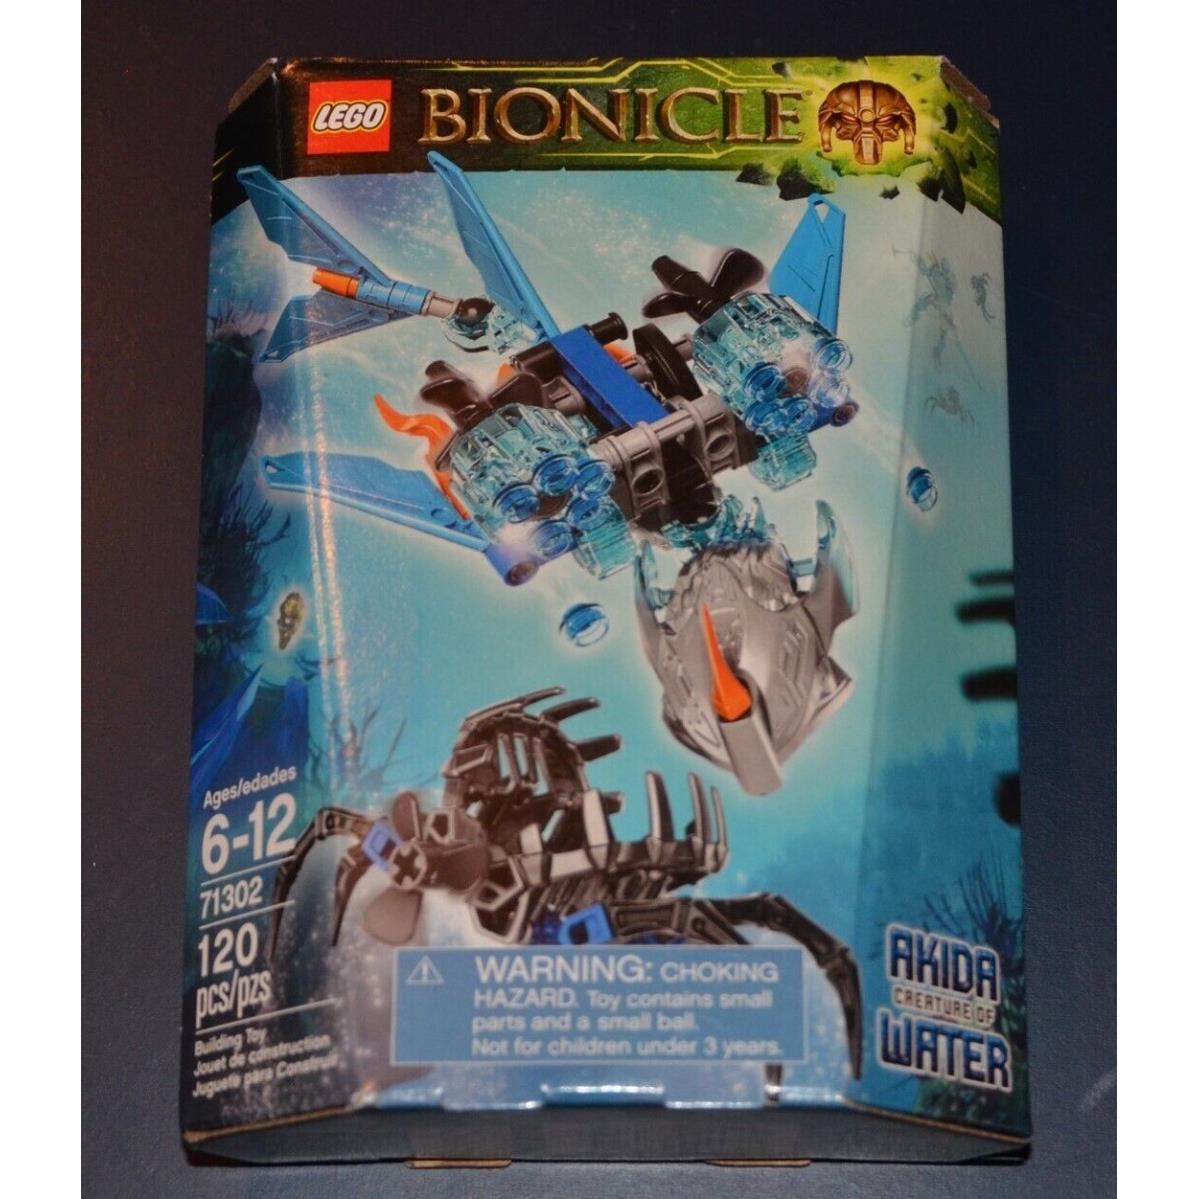 Lego 71302 Bionicle Akida Creature of Water Set